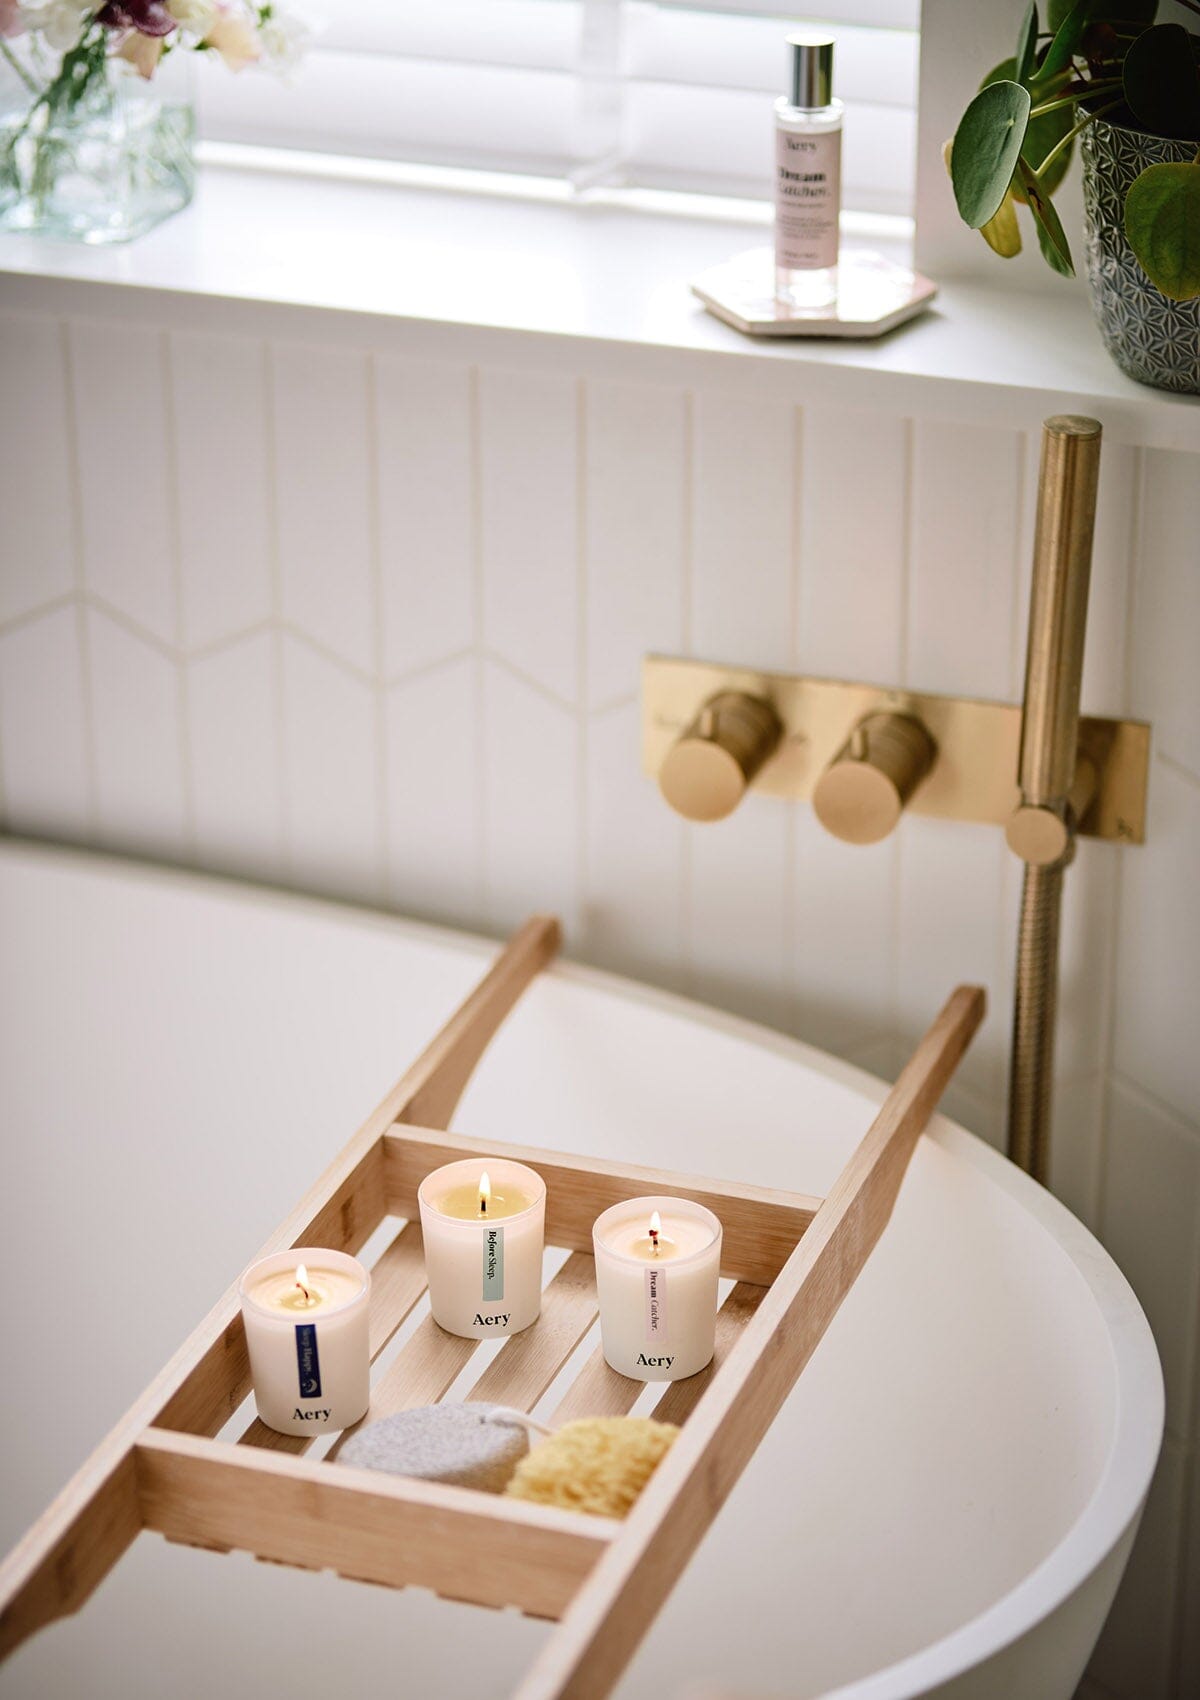 Sleep Happy set of three candles by Aery displayed on wooden bath tray In bathroom 